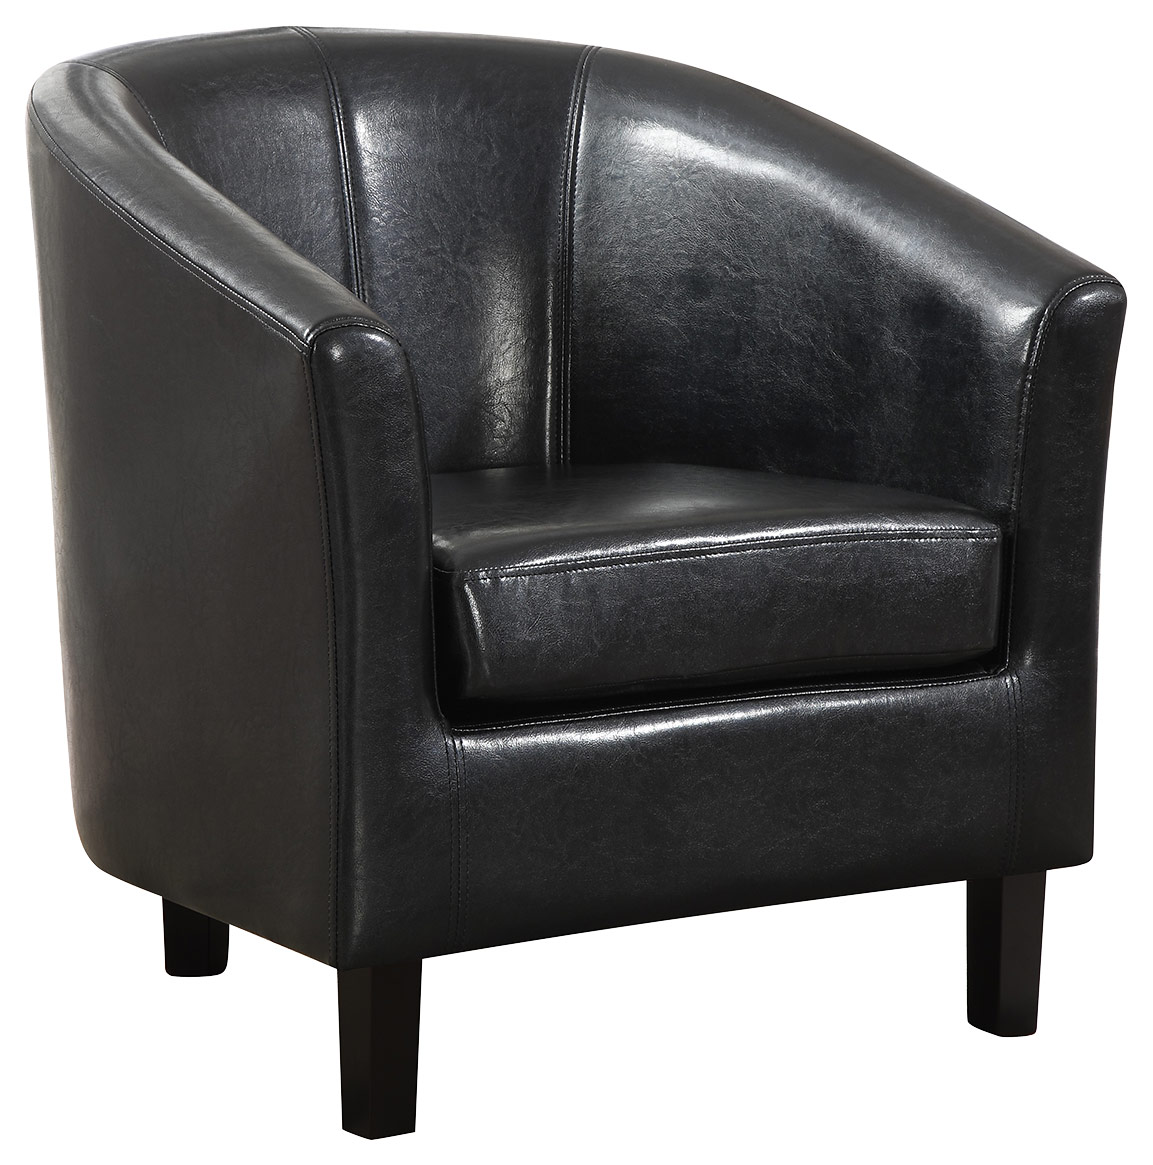 Simpli Home - Austin Armchair - Black was $232.99 now $163.99 (30.0% off)